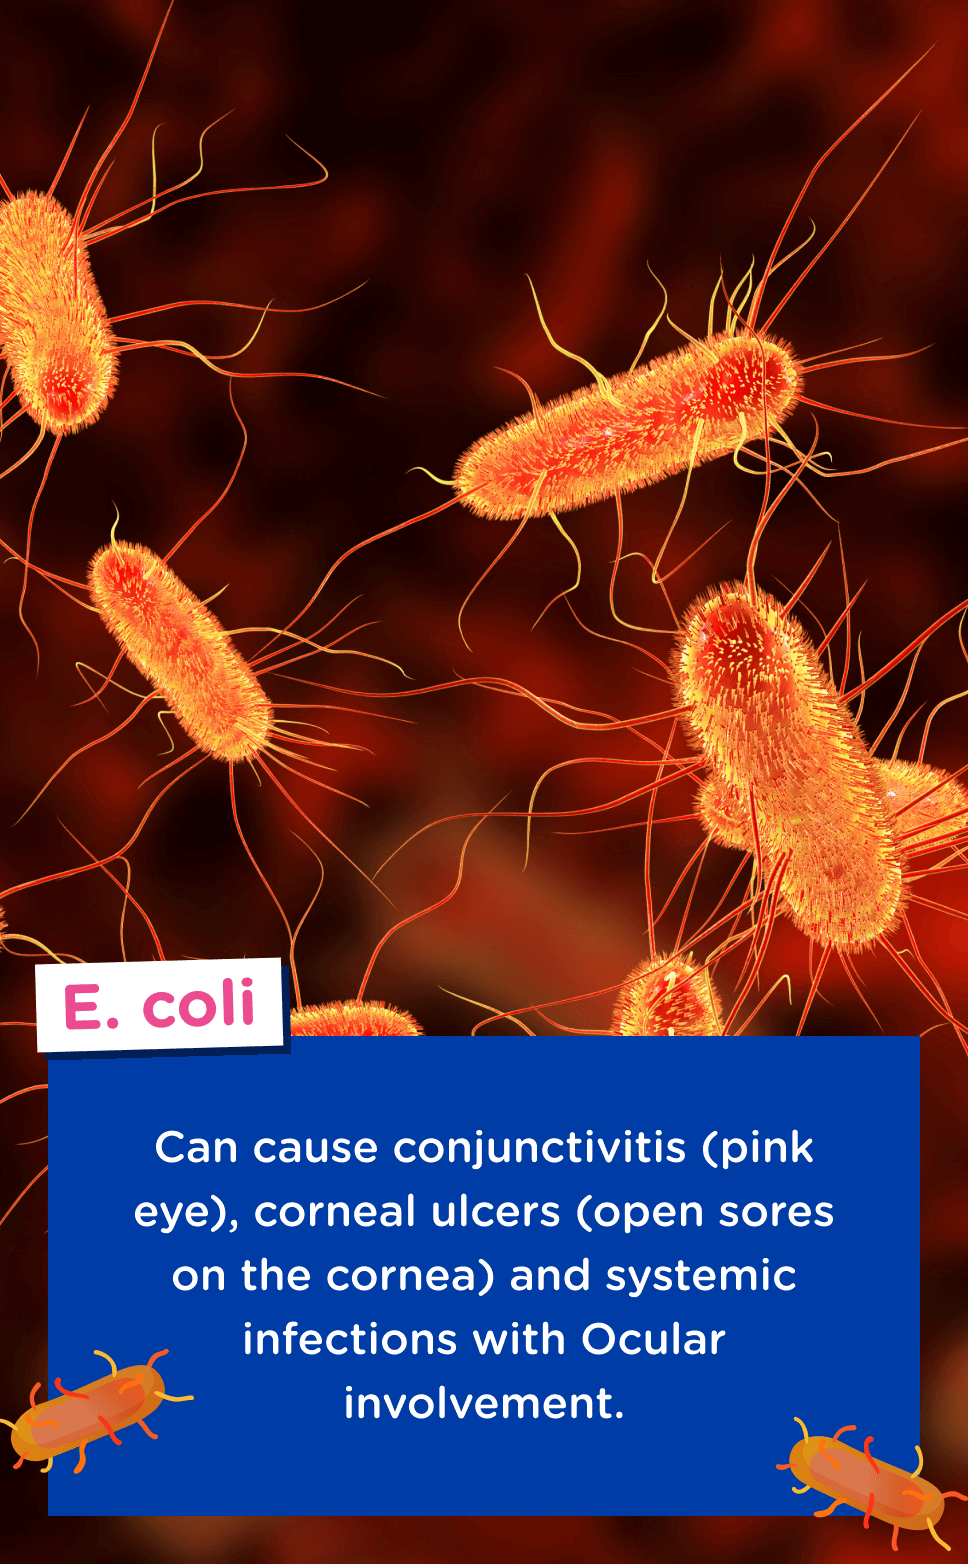 Image of E.Coli bacteria